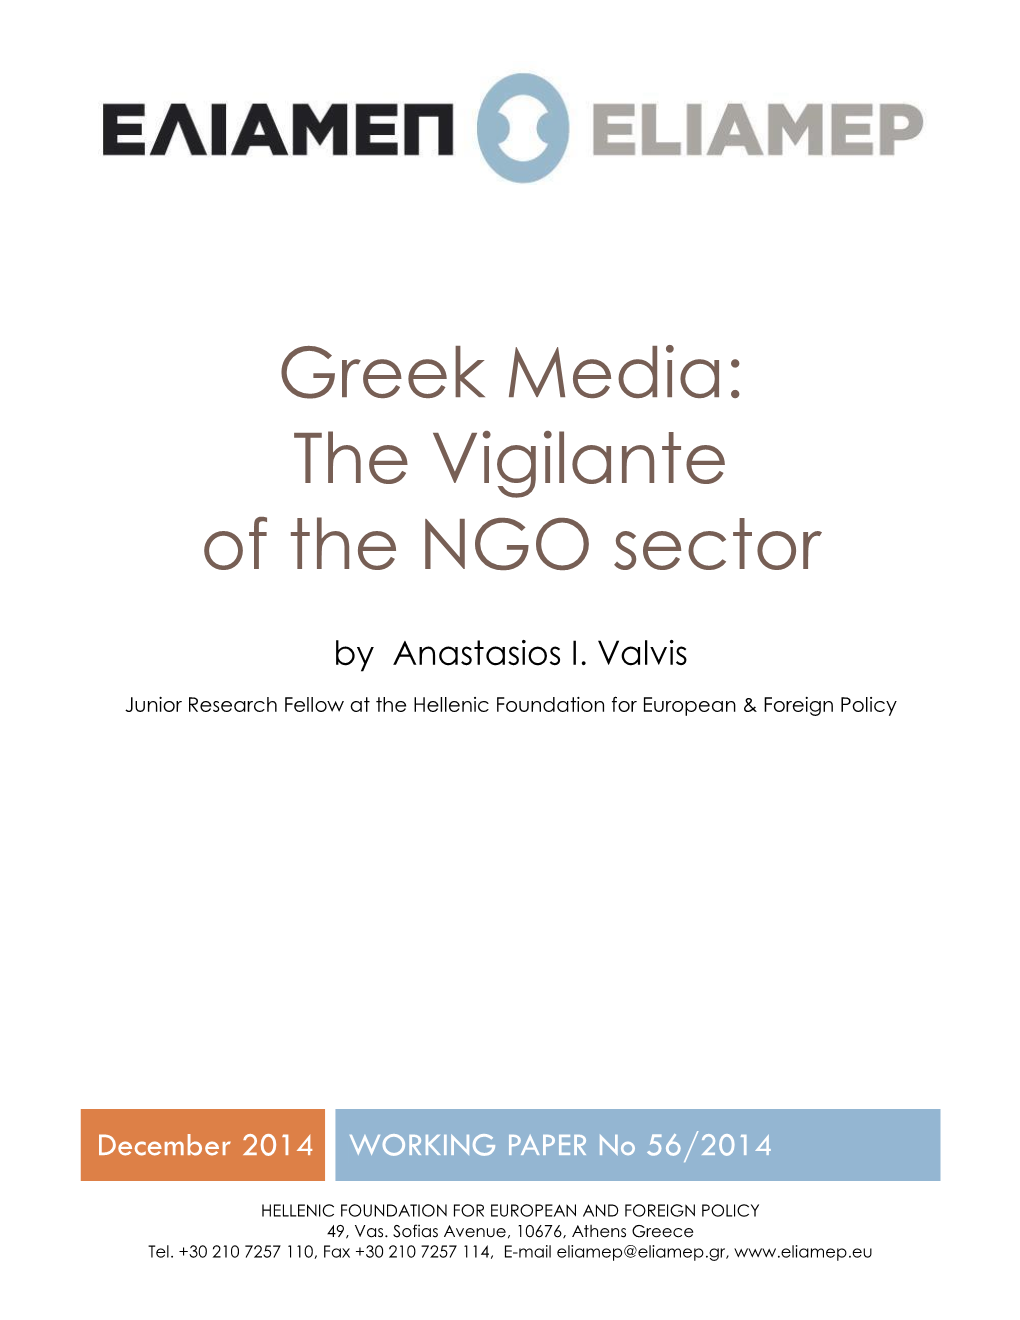 Greek Media: the Vigilante of the NGO Sector